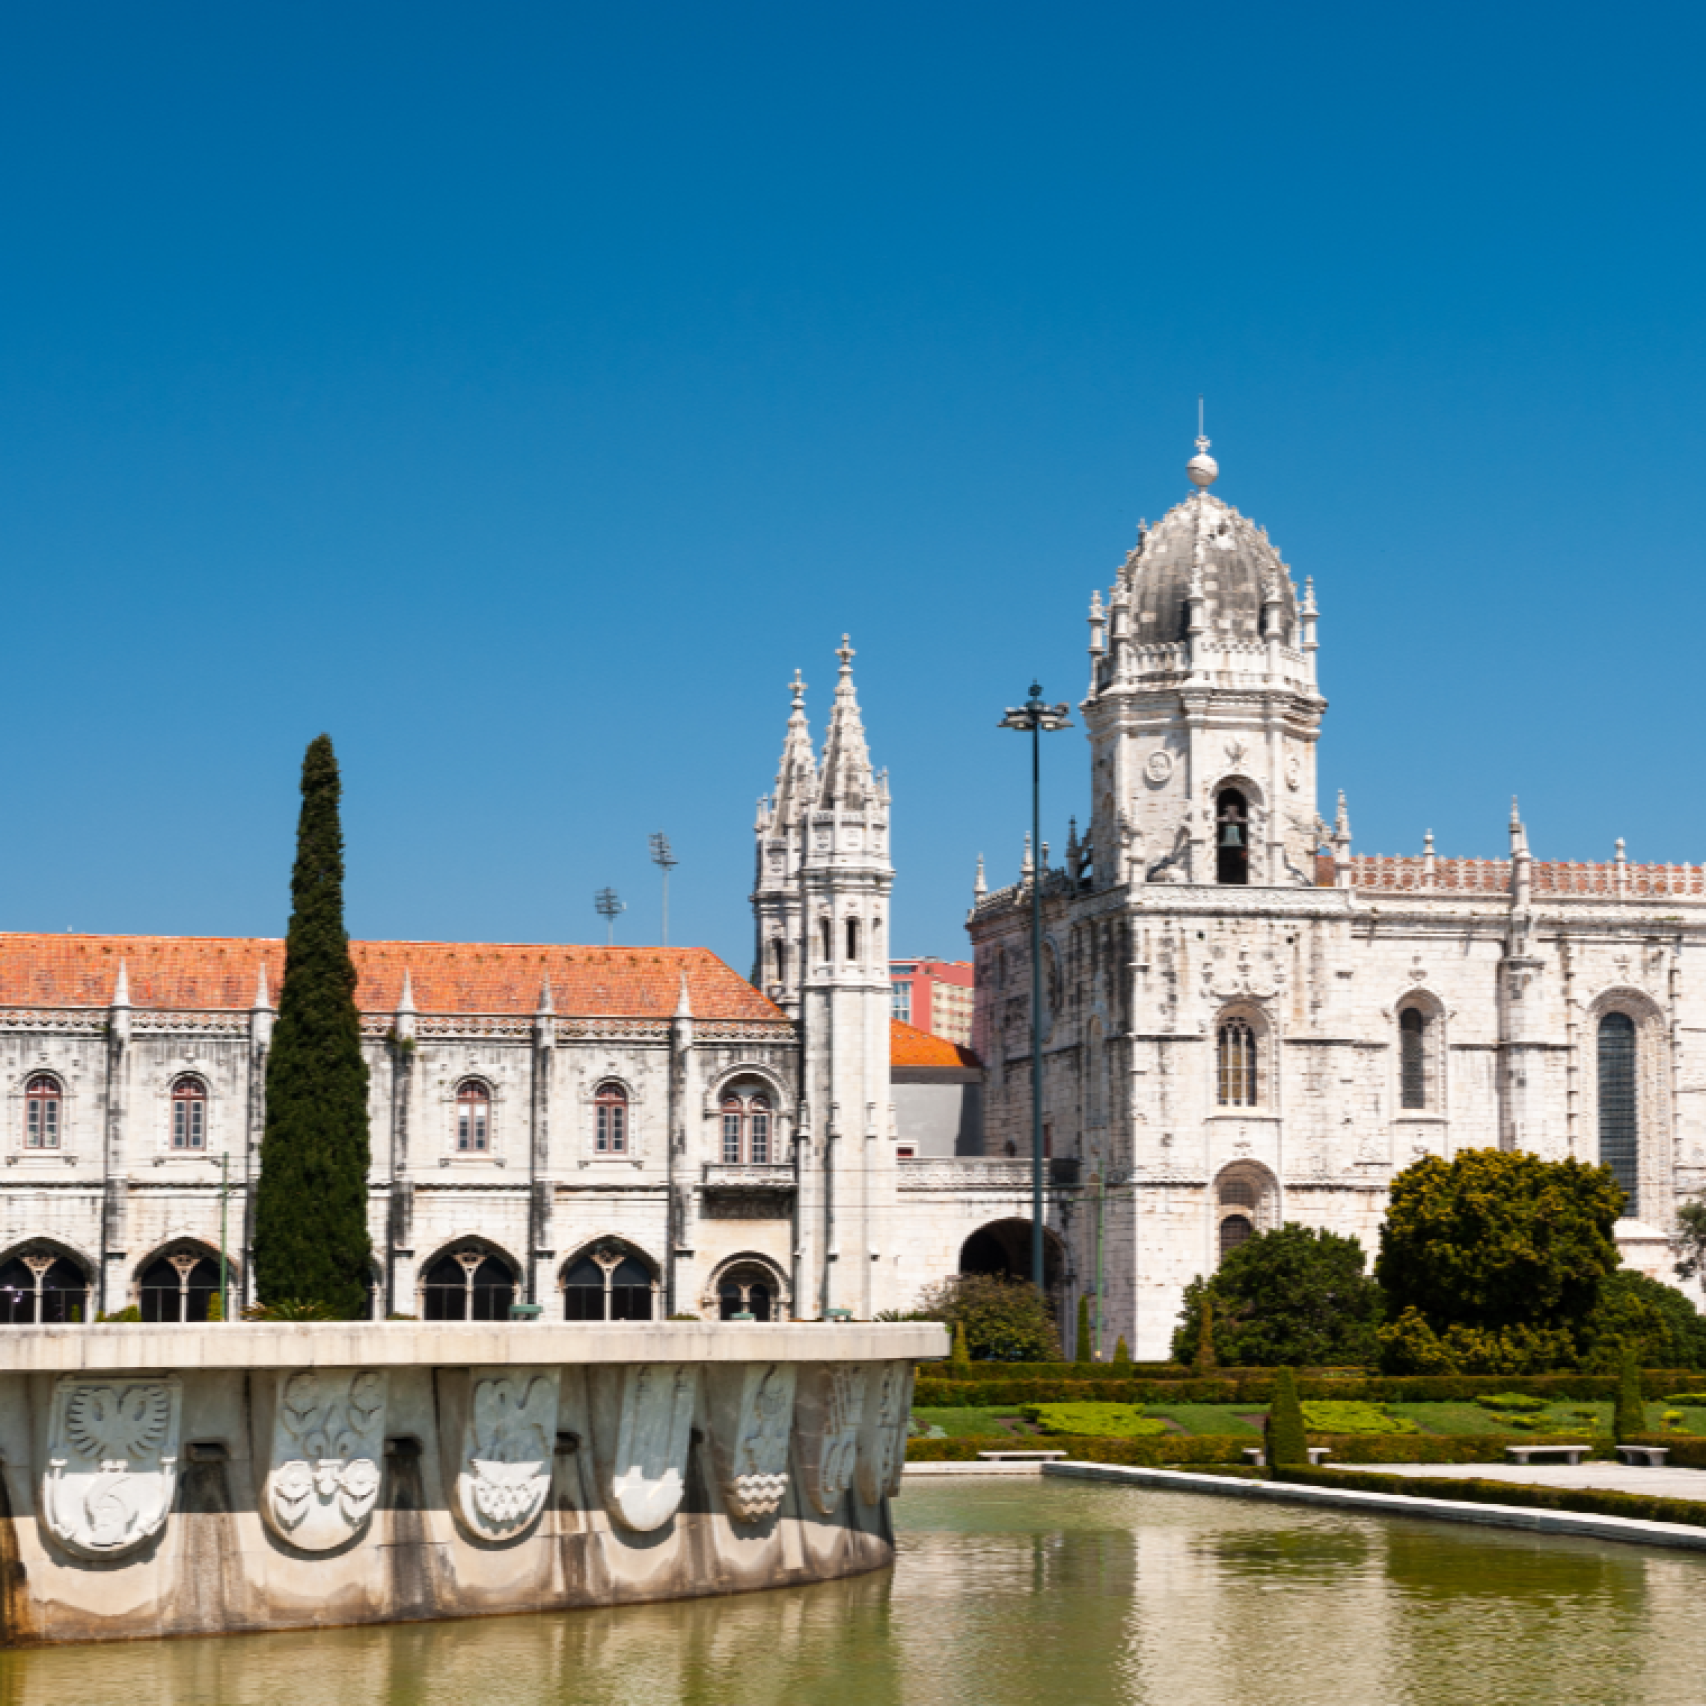 Lisbon Jeronimos Monastery